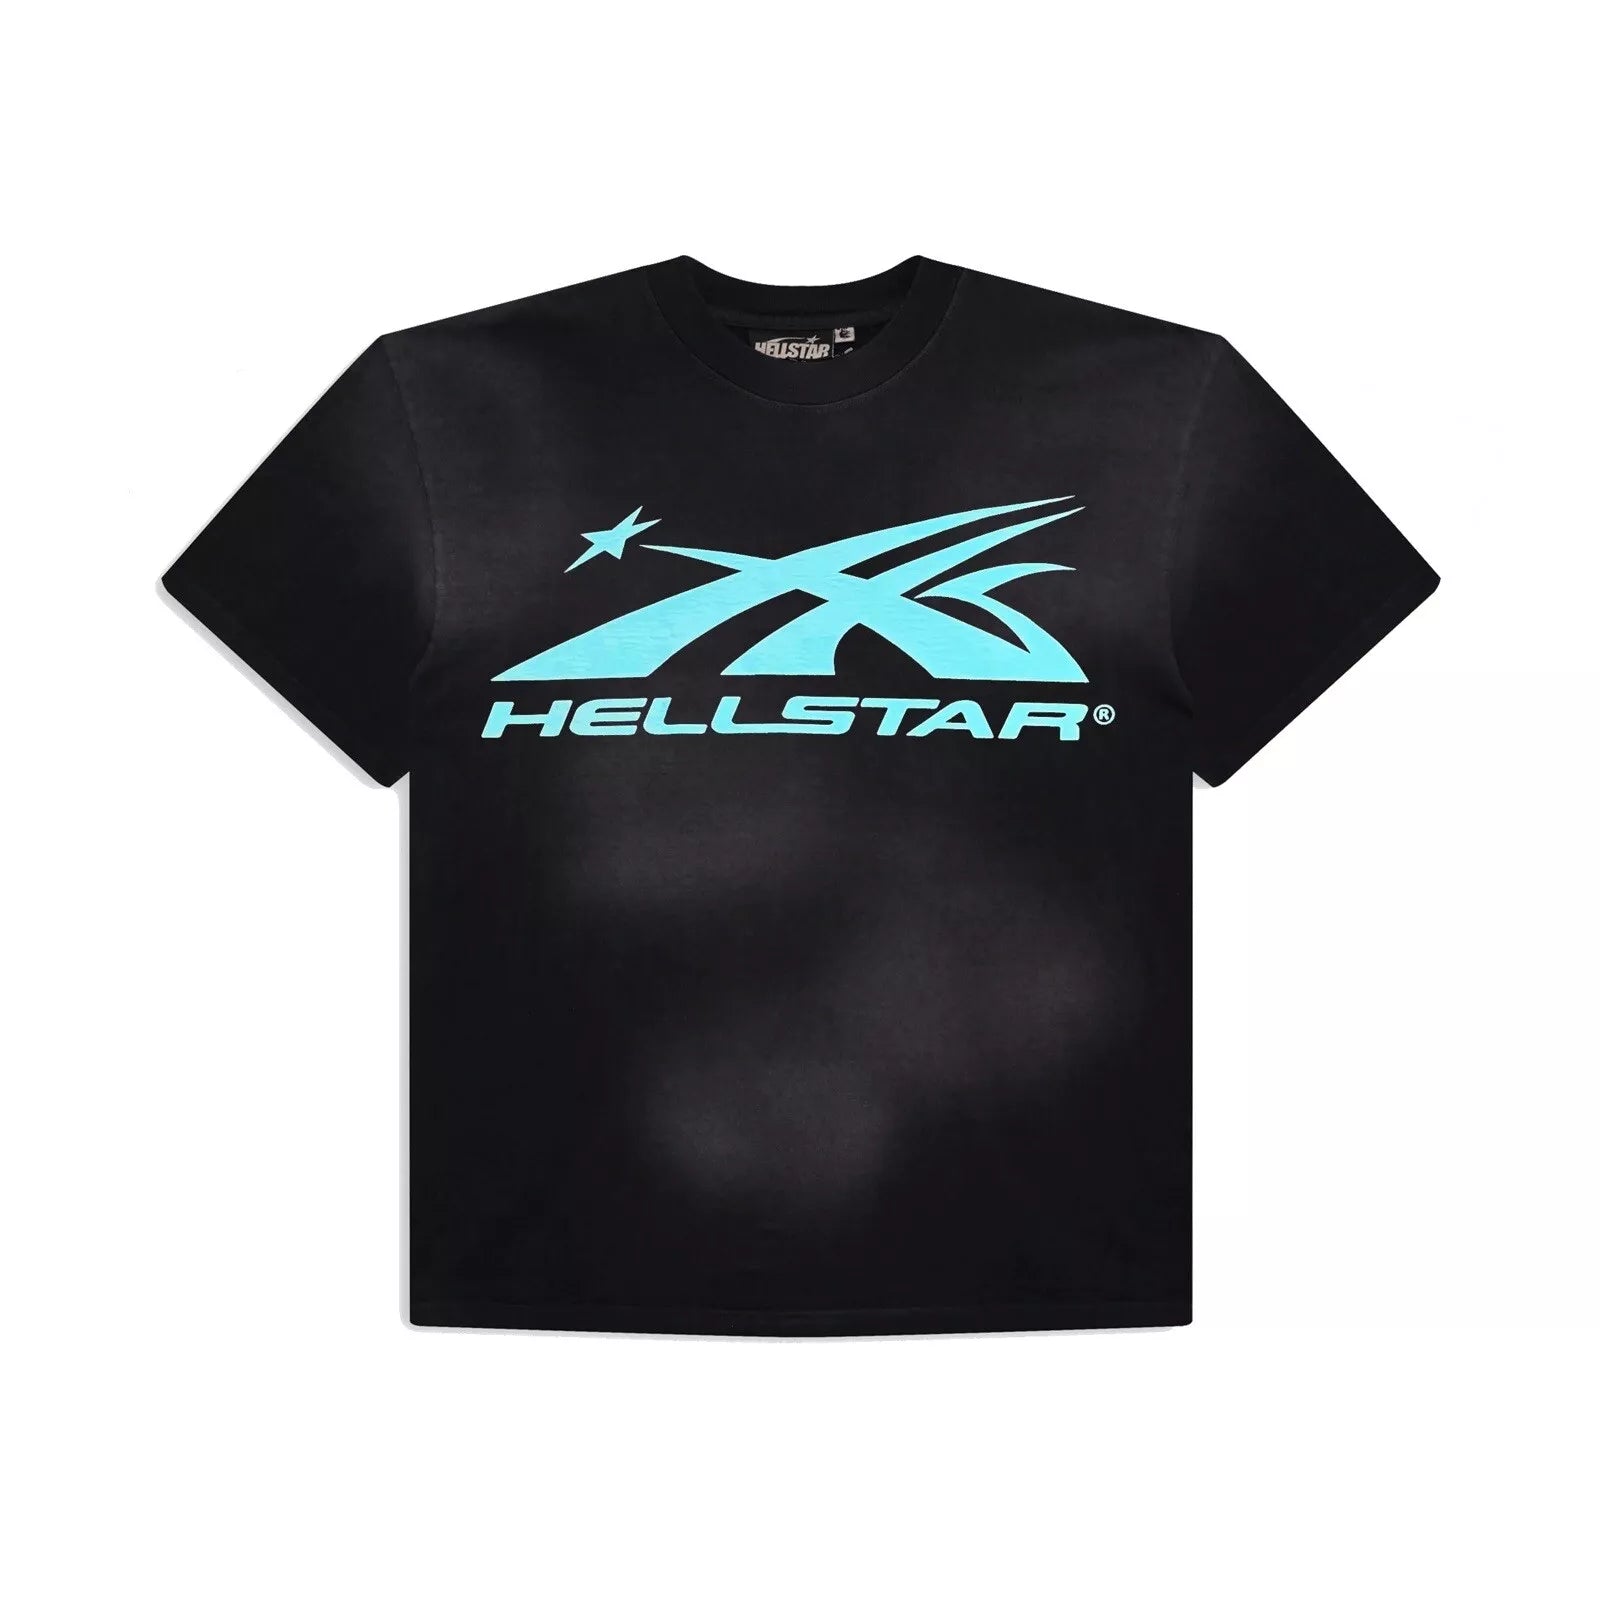 Hellstar Gel Sport Logo T-Shirt Black/Light Blue